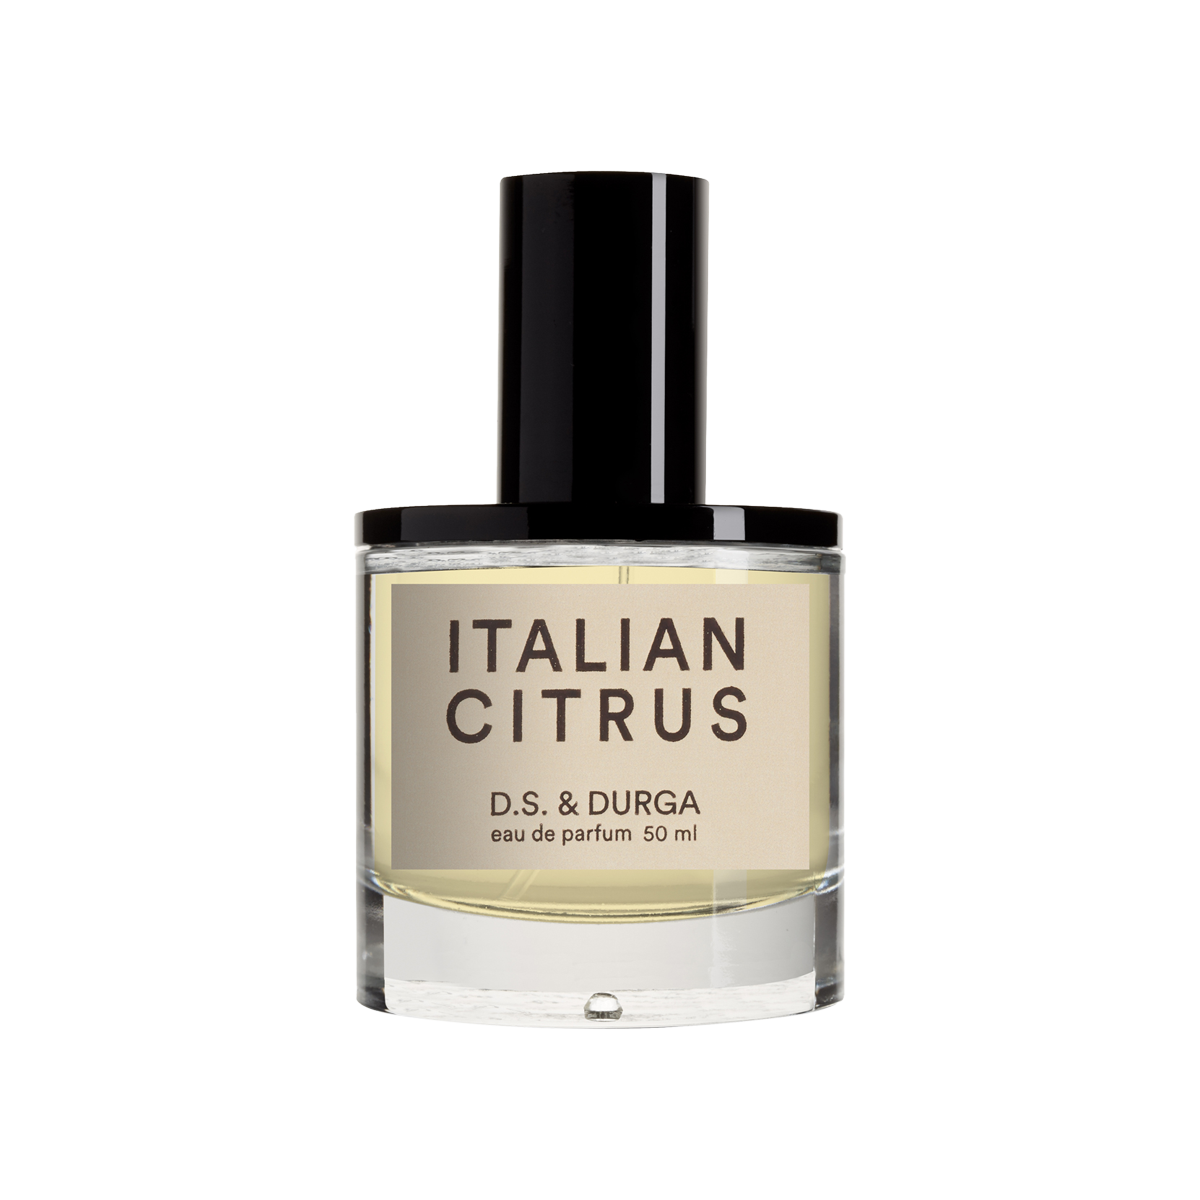 D.S. & DURGA - Italian Citrus Eau de Parfum